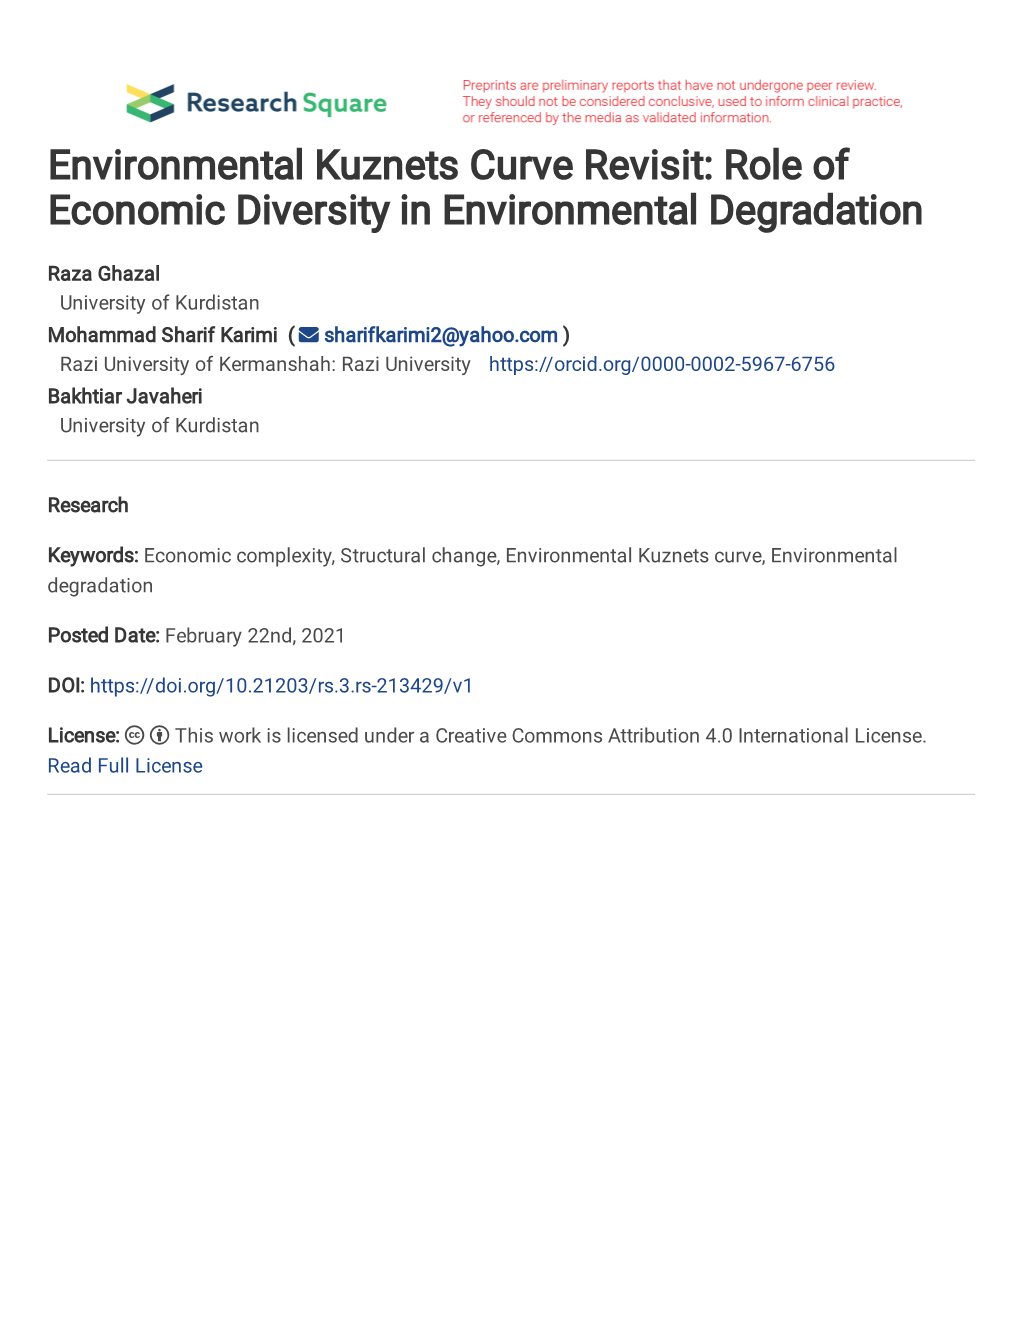 Environmental Kuznets Curve Revisit: Role of Economic Diversity in Environmental Degradation